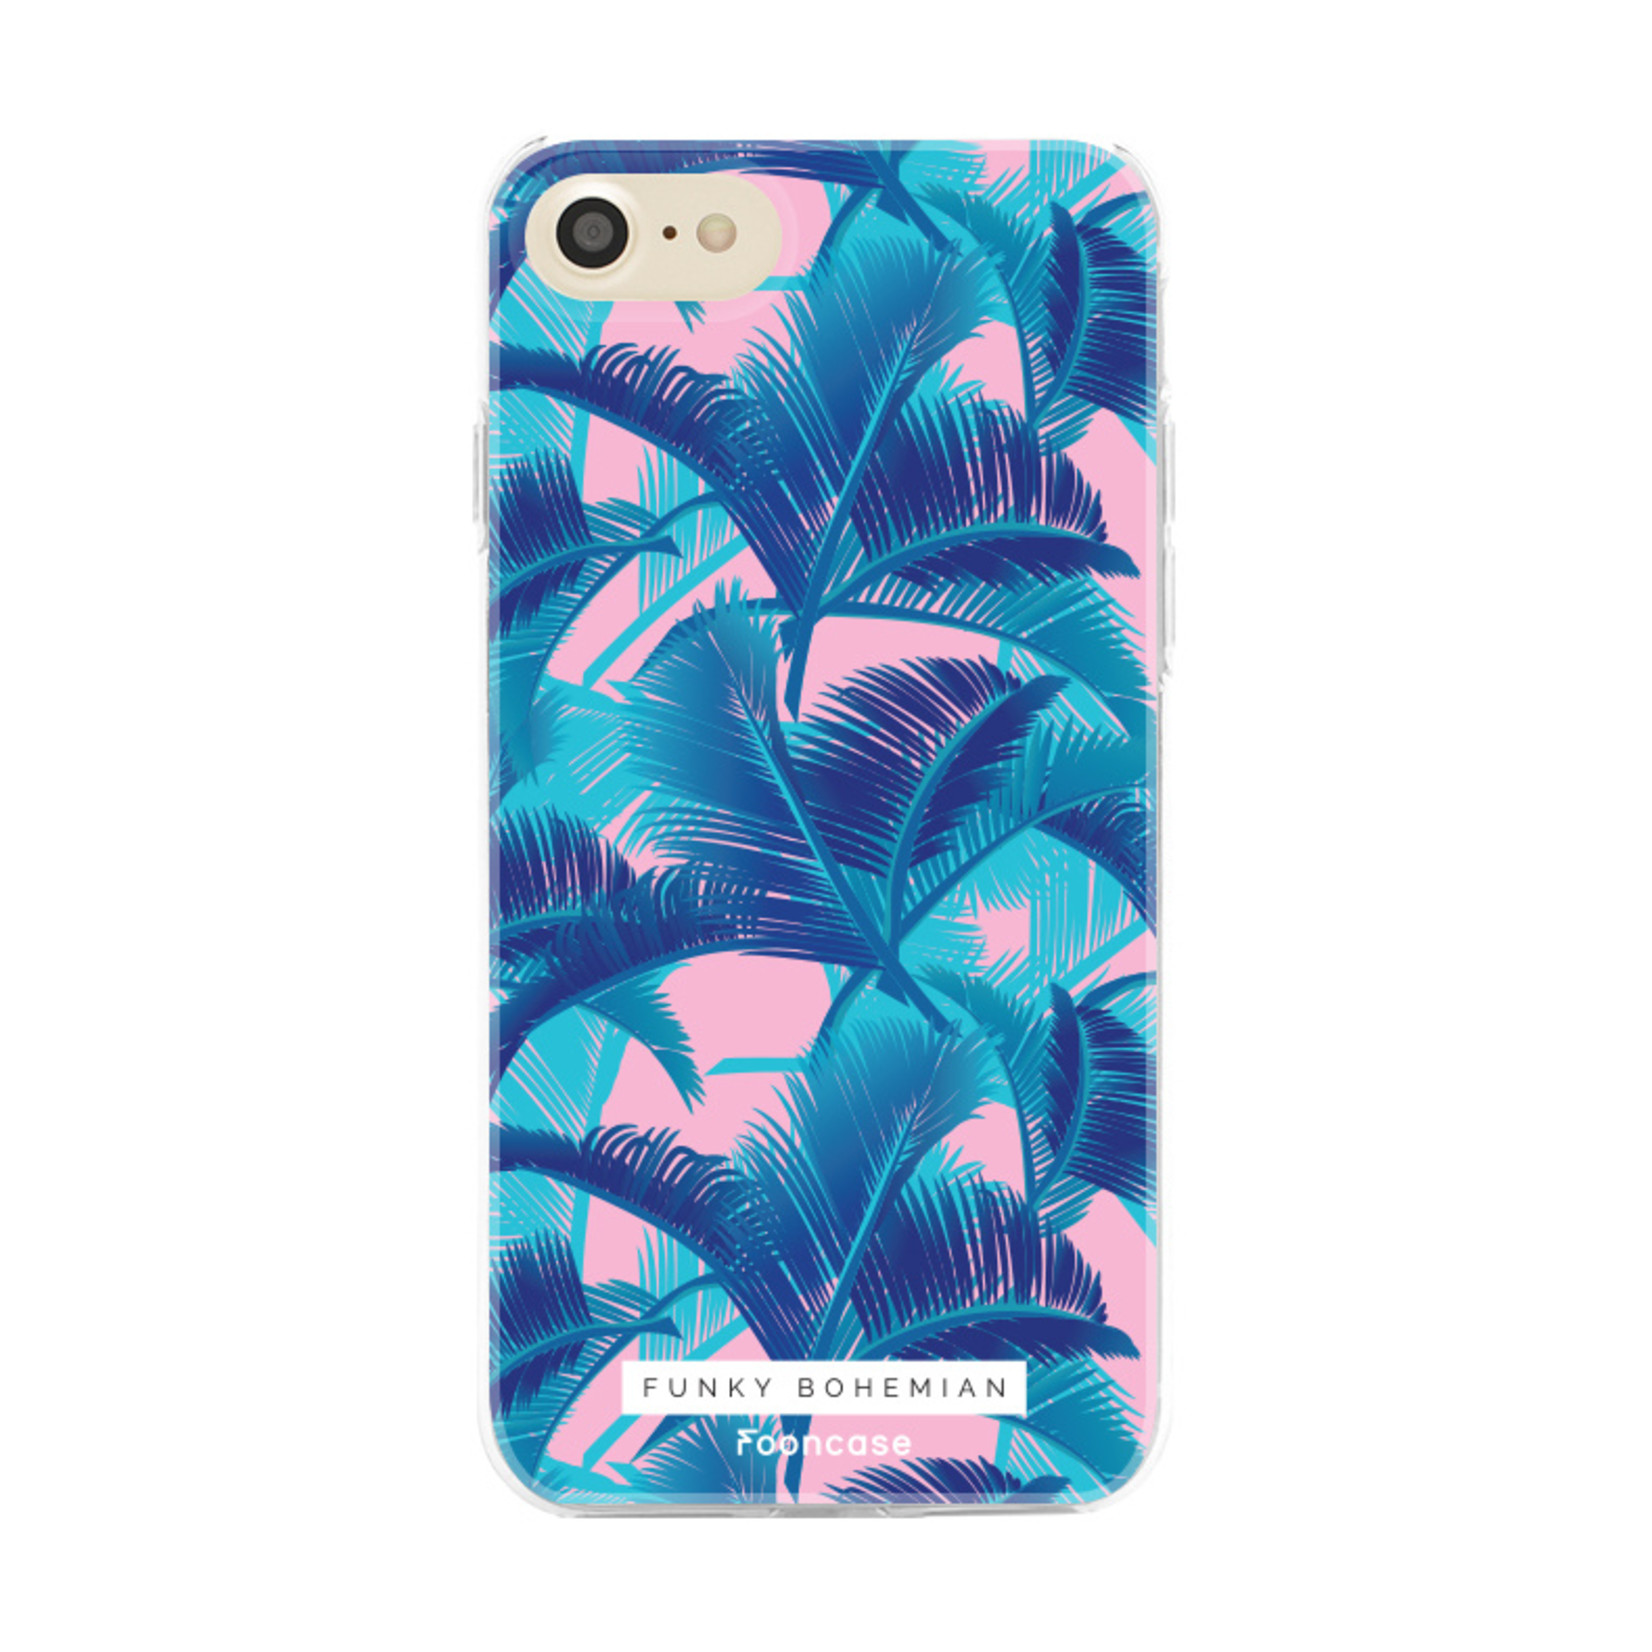 FOONCASE iPhone SE (2020) hoesje TPU Soft Case - Back Cover - Funky Bohemian / Blauw Roze Bladeren